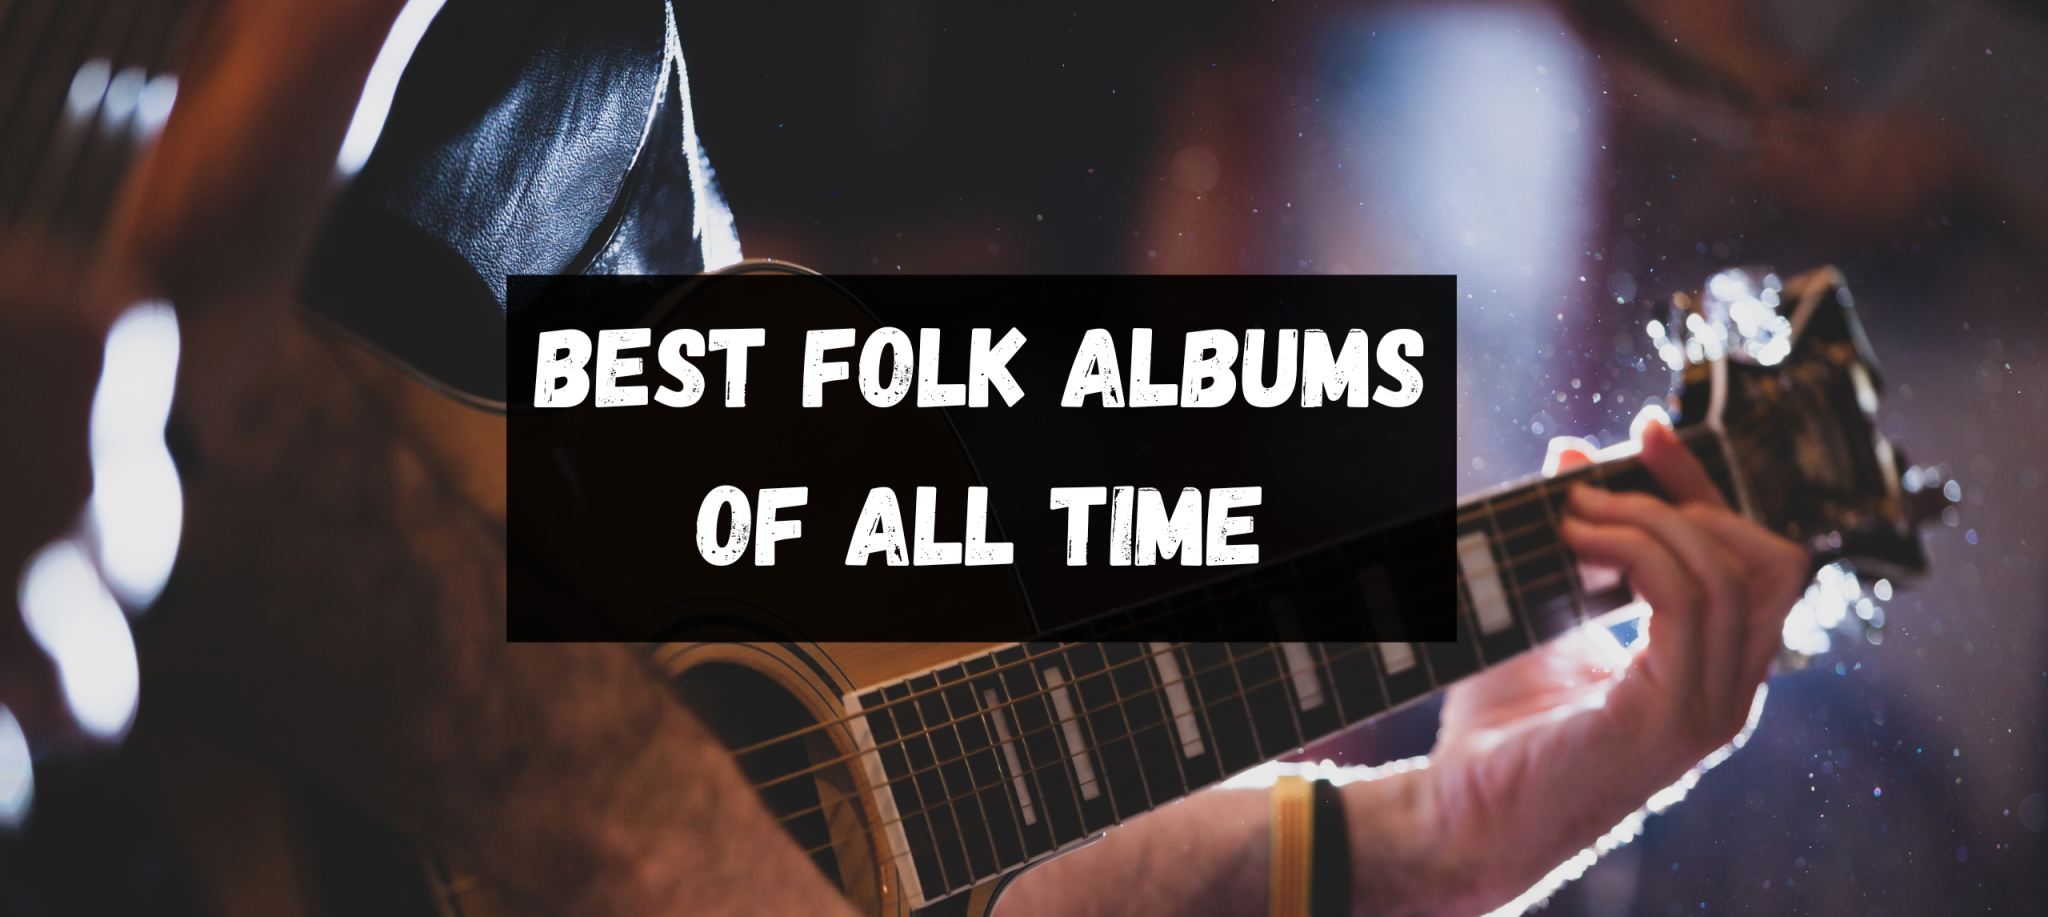 30 Best Folk Albums of All Time | HBH